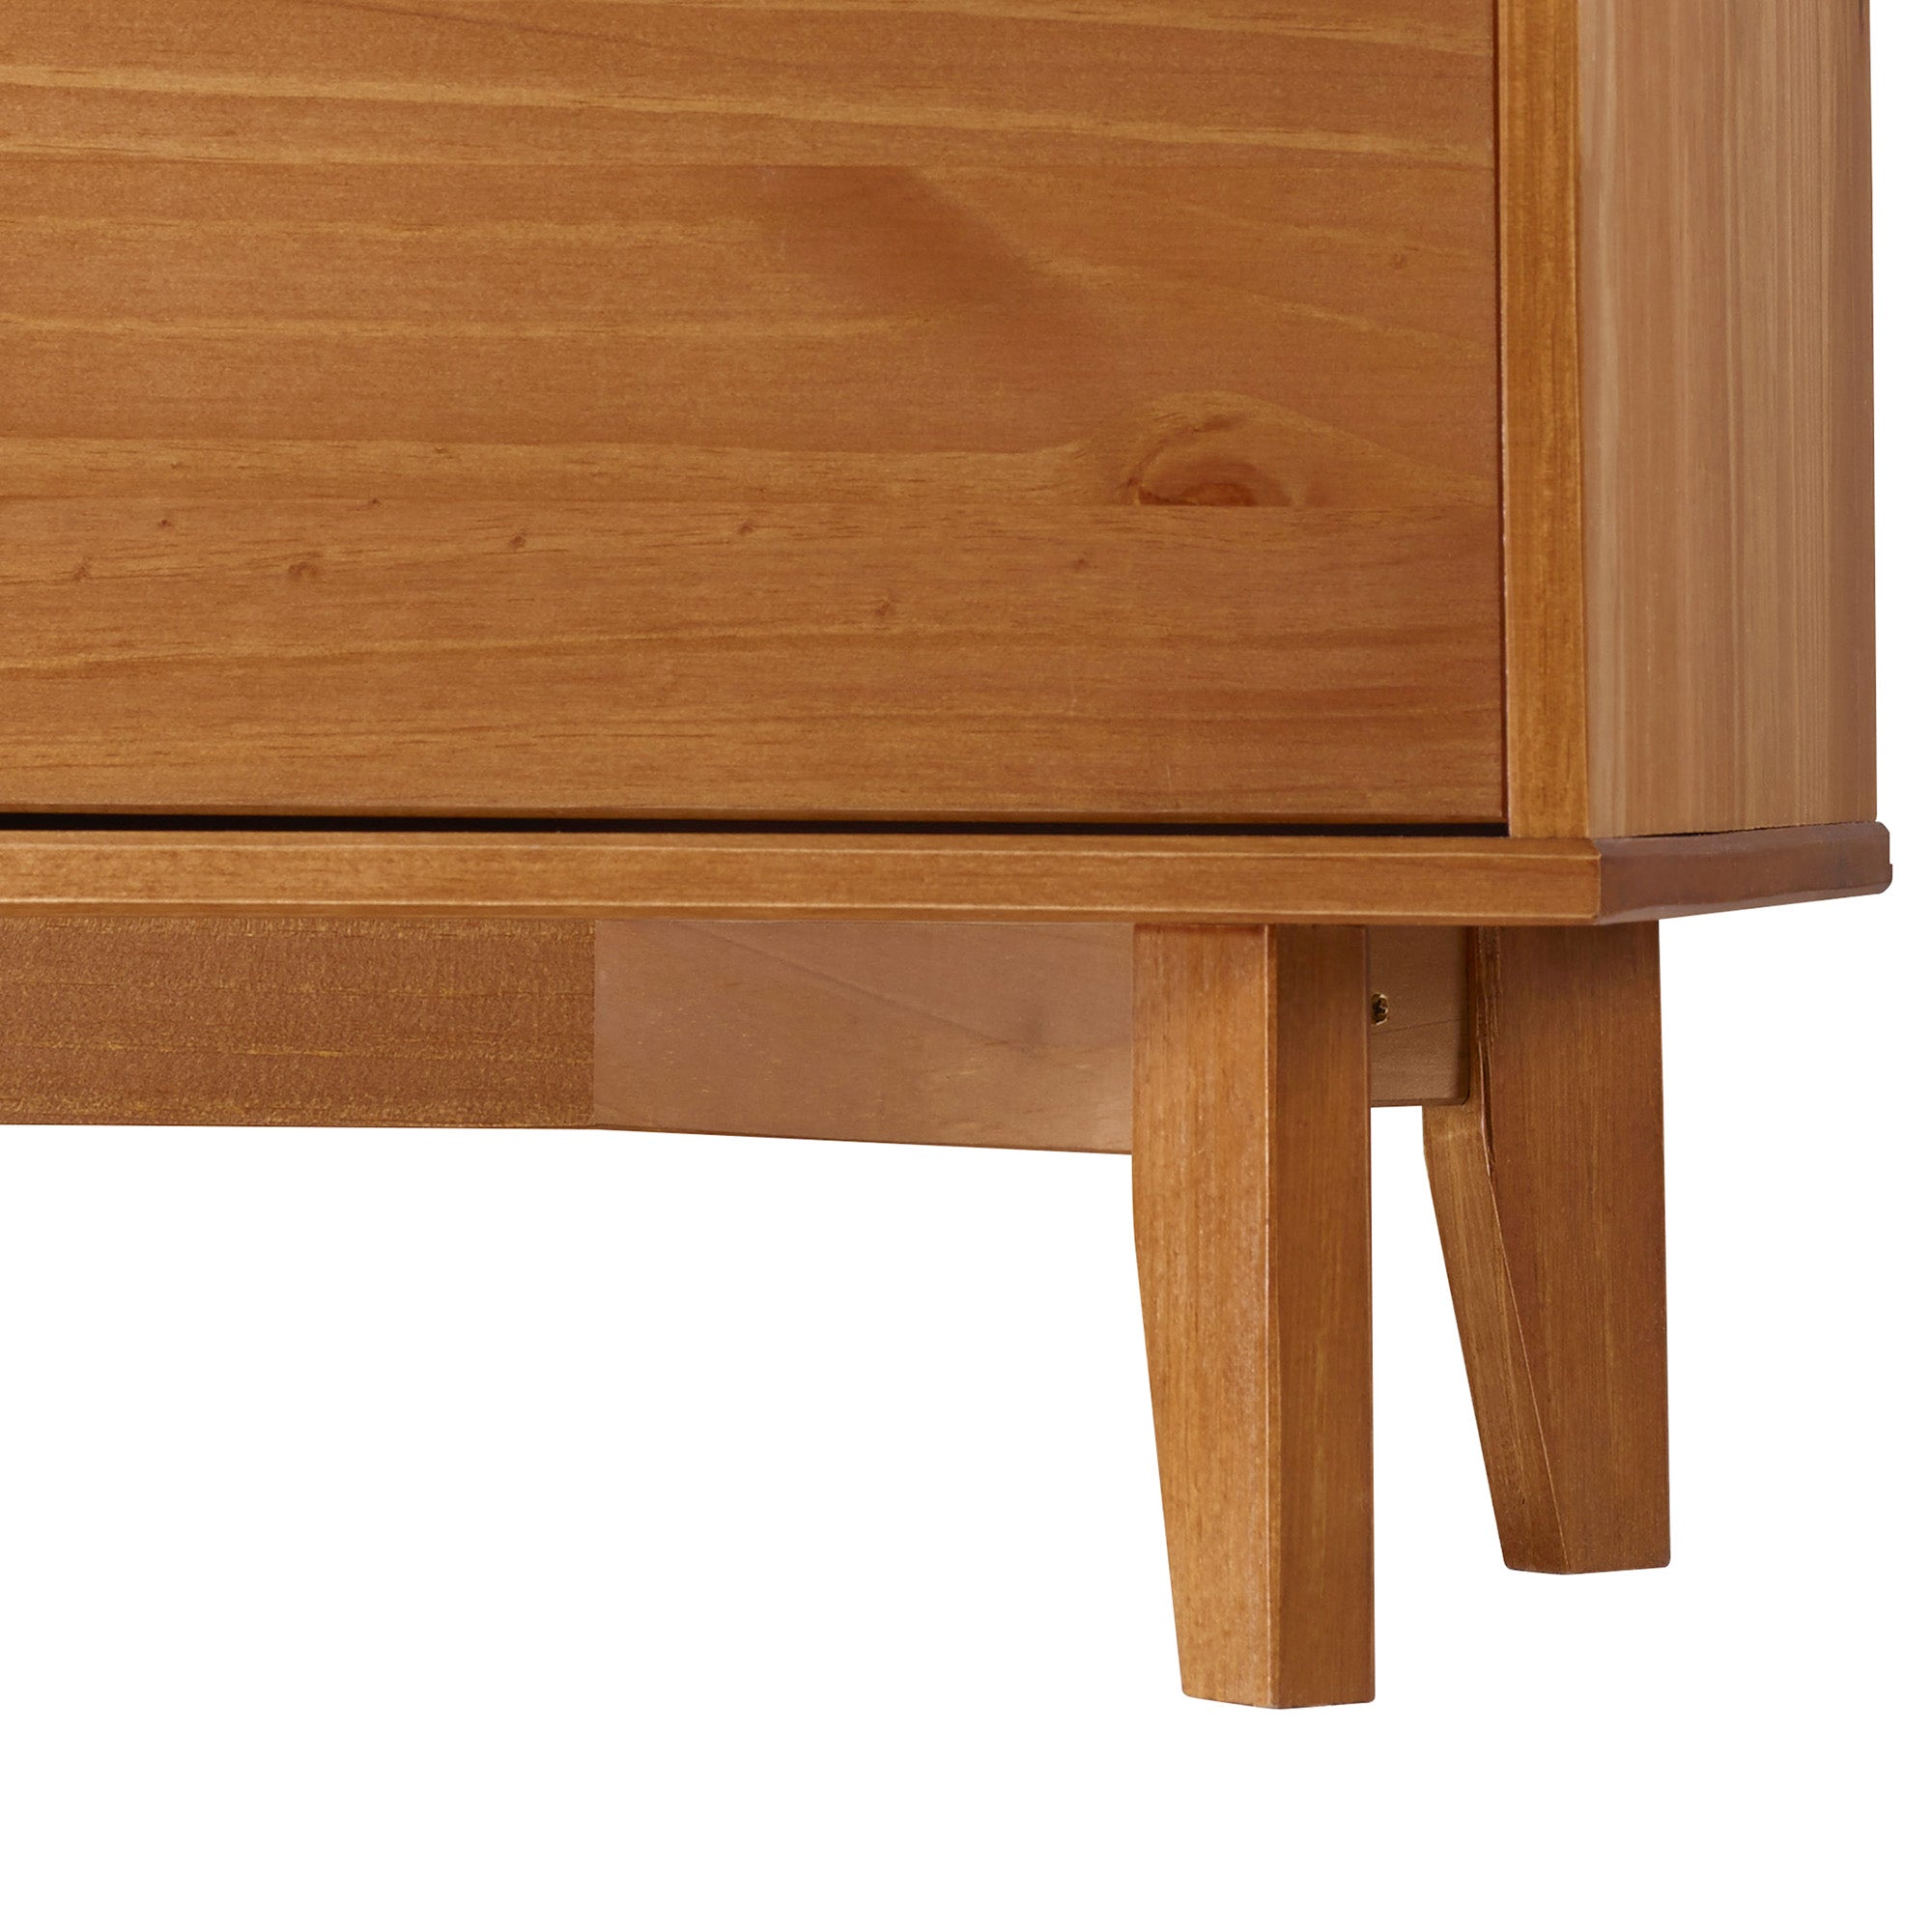 Sloane 6 Drawer Groove Handle Wood Dresser